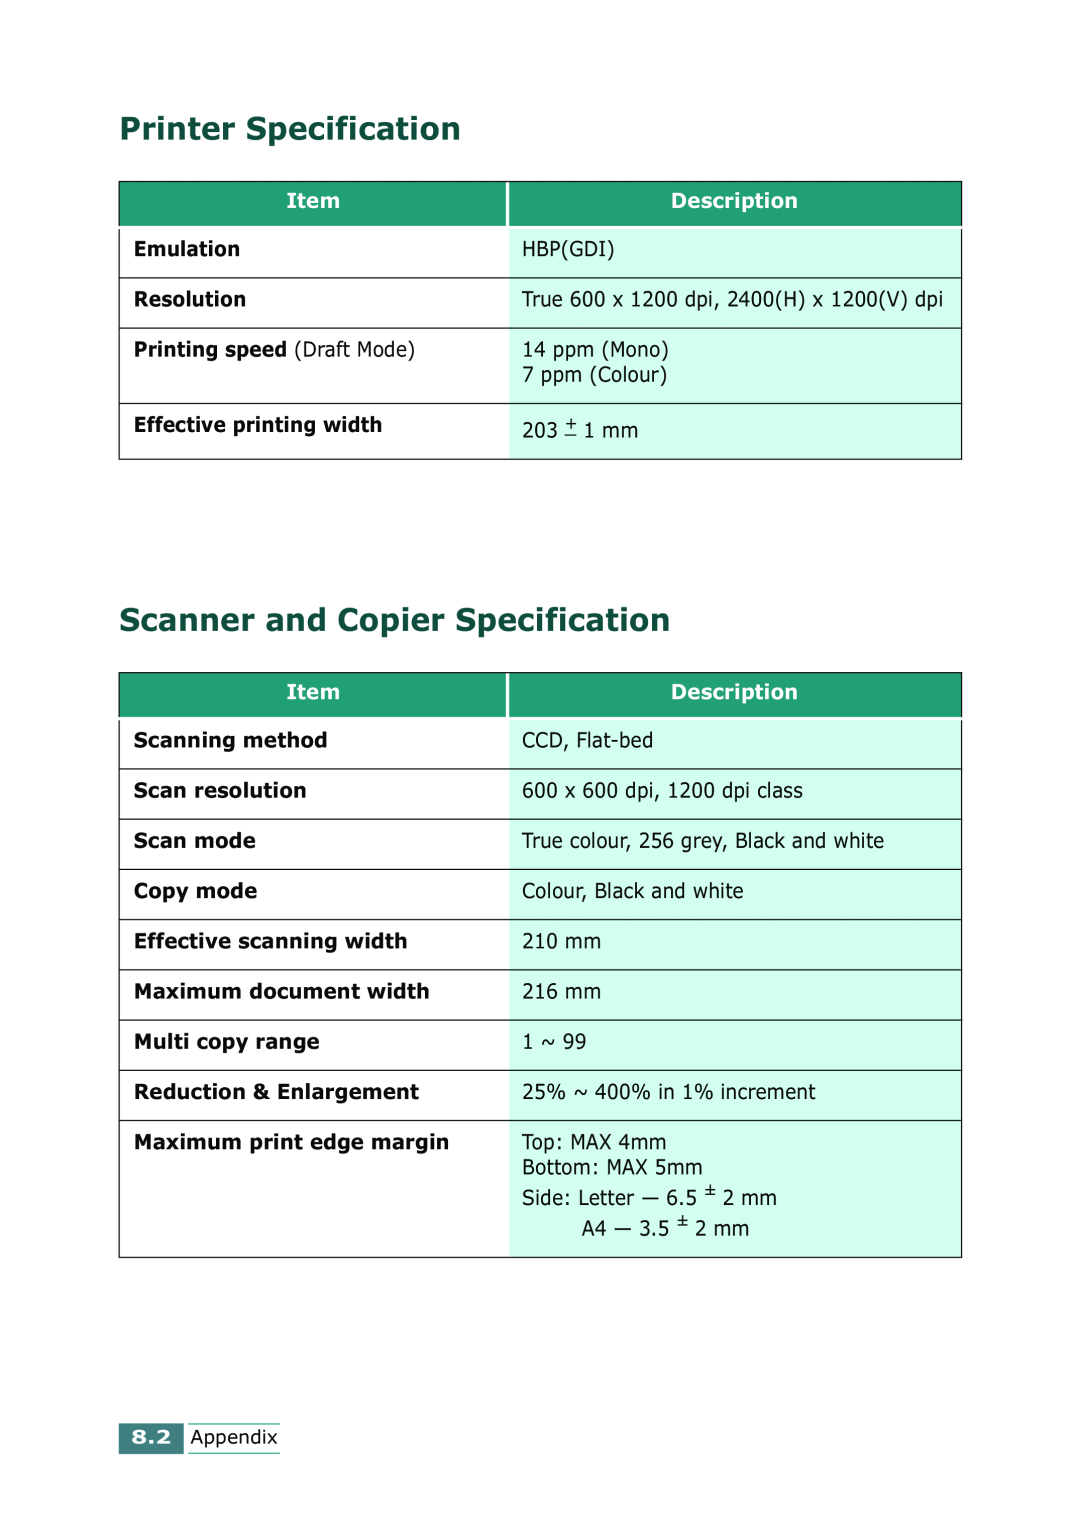 Samsung SCX-1100 Printer Specification, Scanner and Copier Specification, Description, Emulation, Resolution, Scan mode 